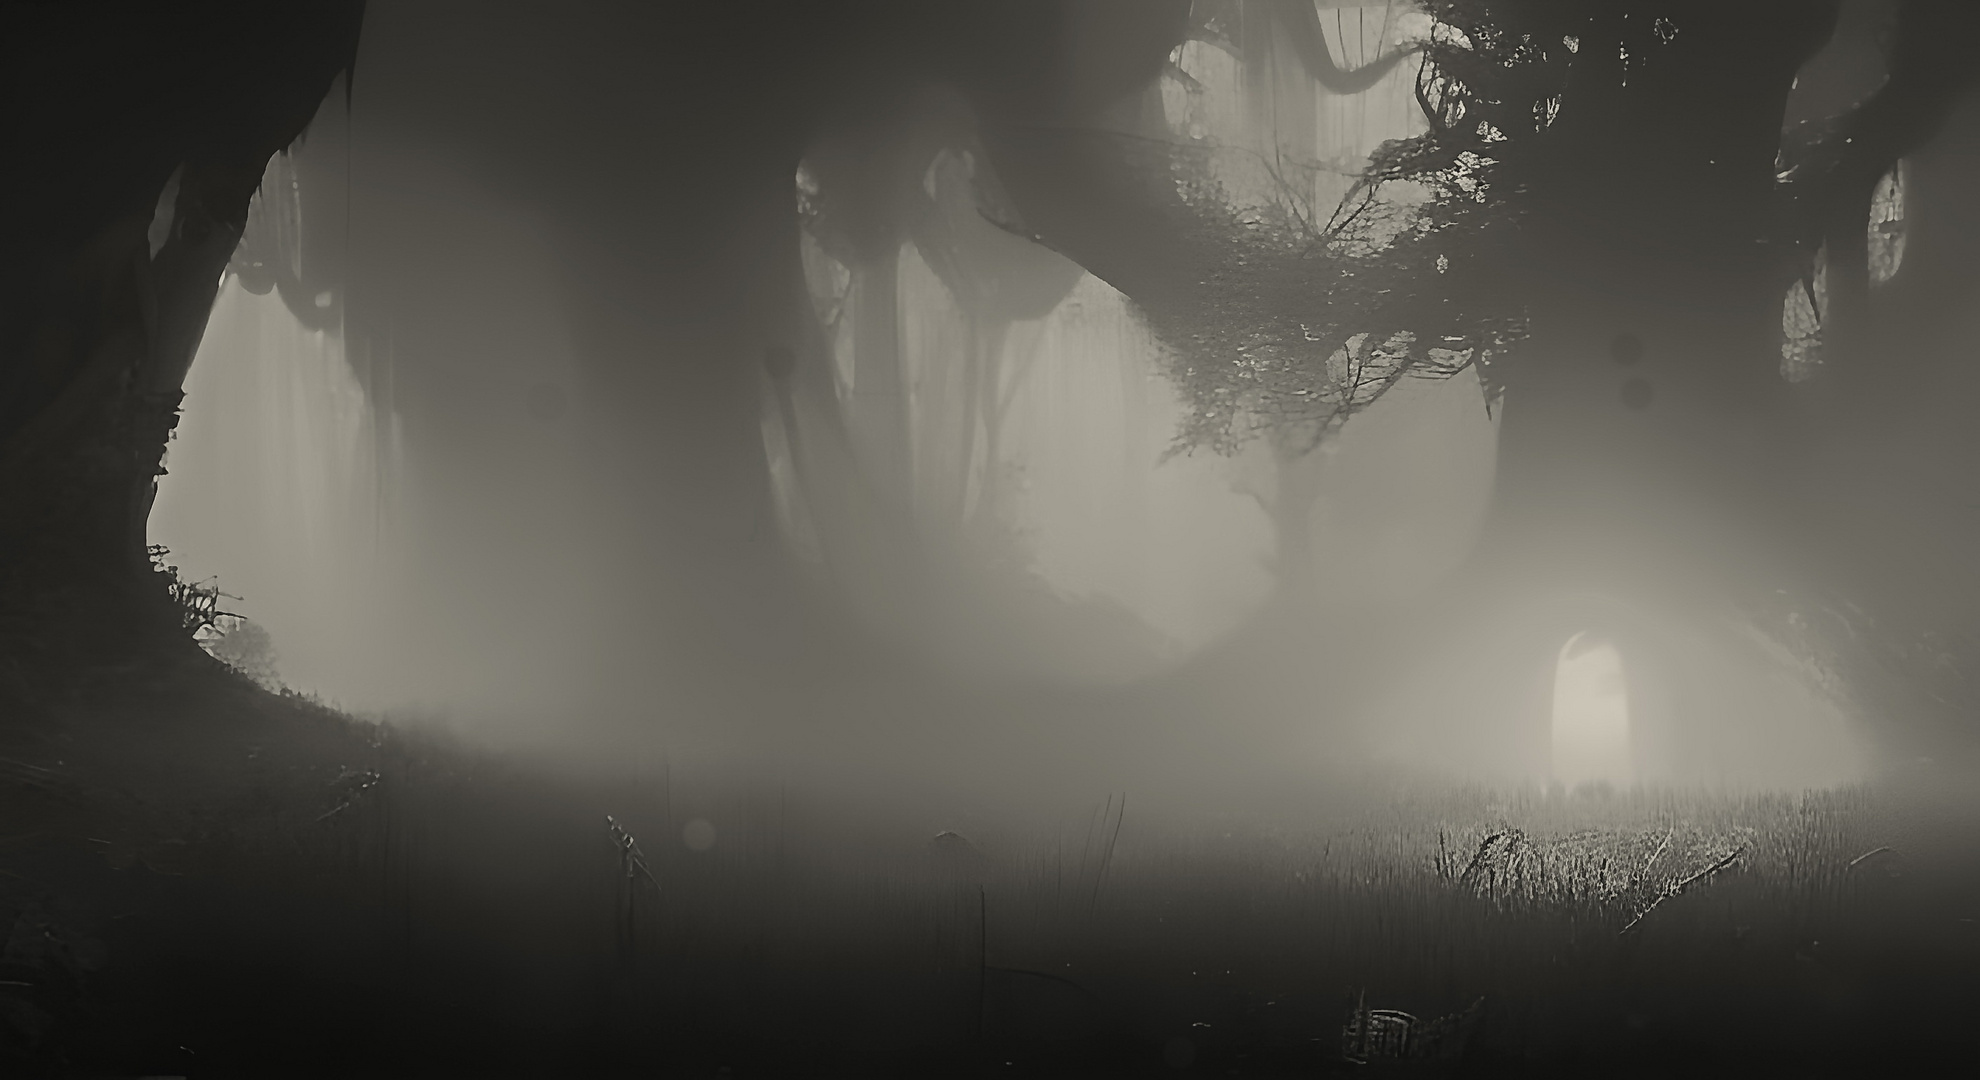 Im Nebelwald